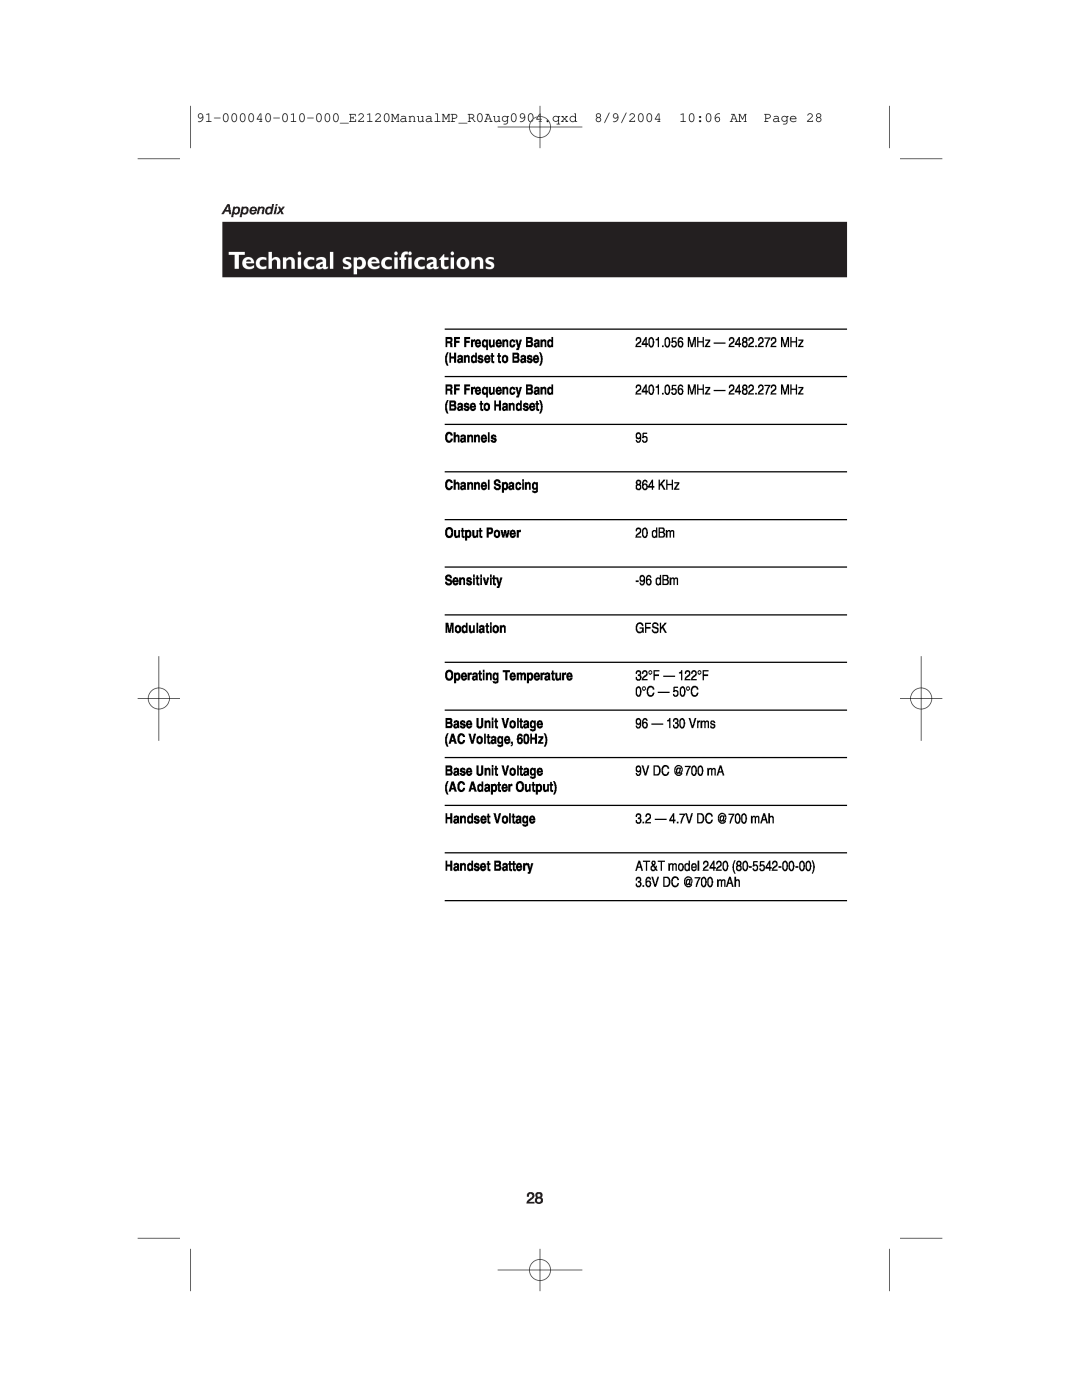 AT&T ATT-E2120 user manual Technical specifications, Appendix, Operating Temperature 